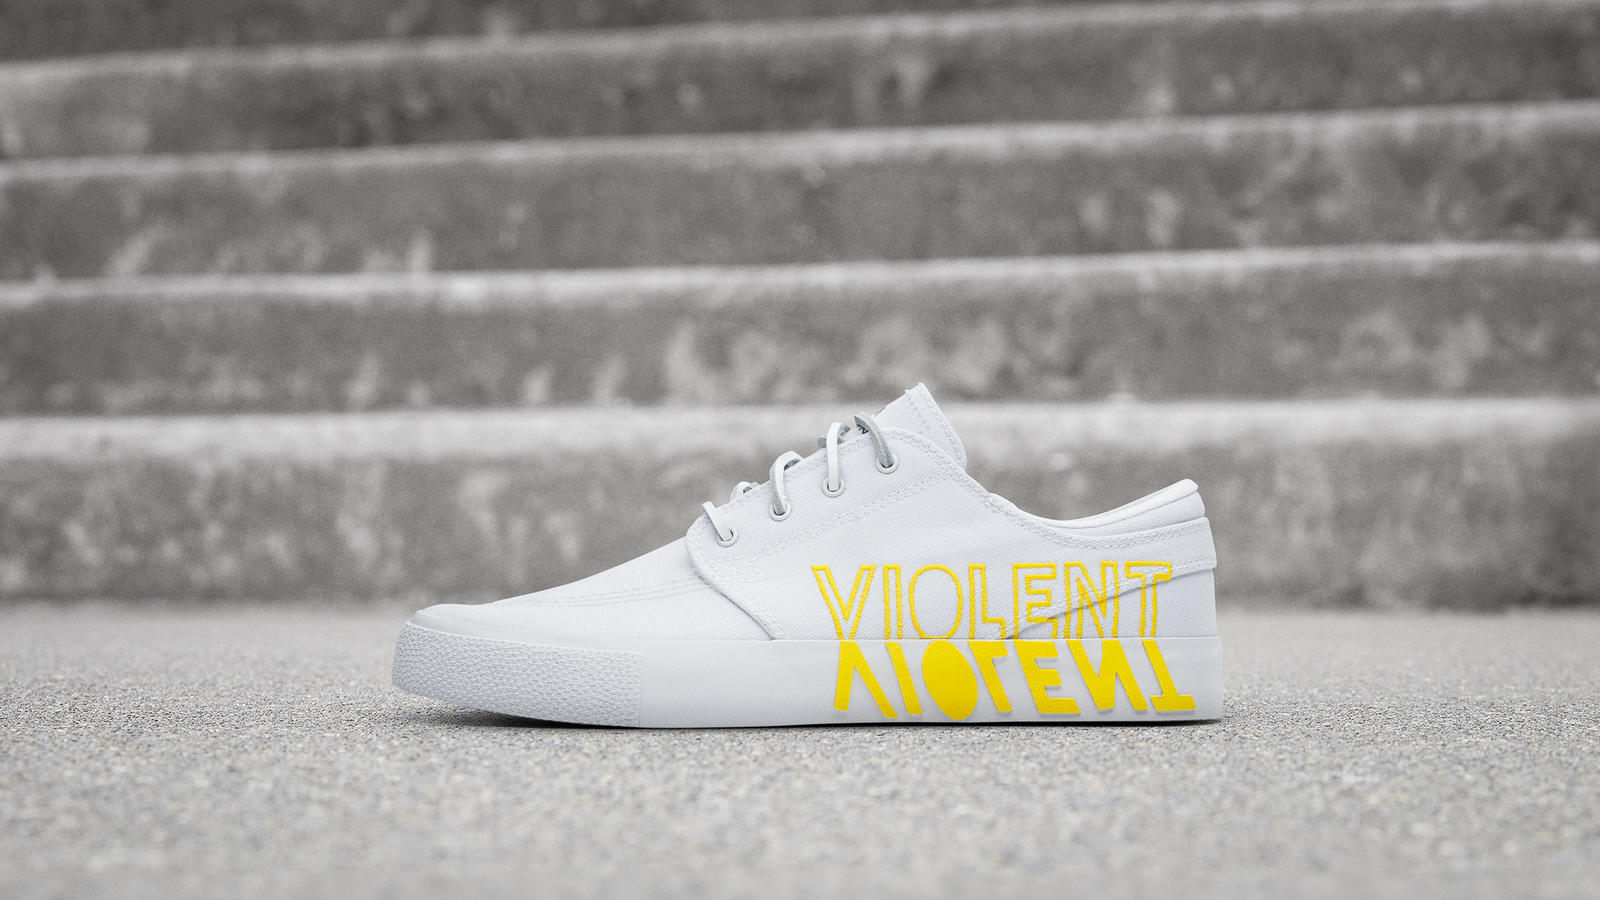 Nike SB Zoom Janoski RM “Violent Femmes”